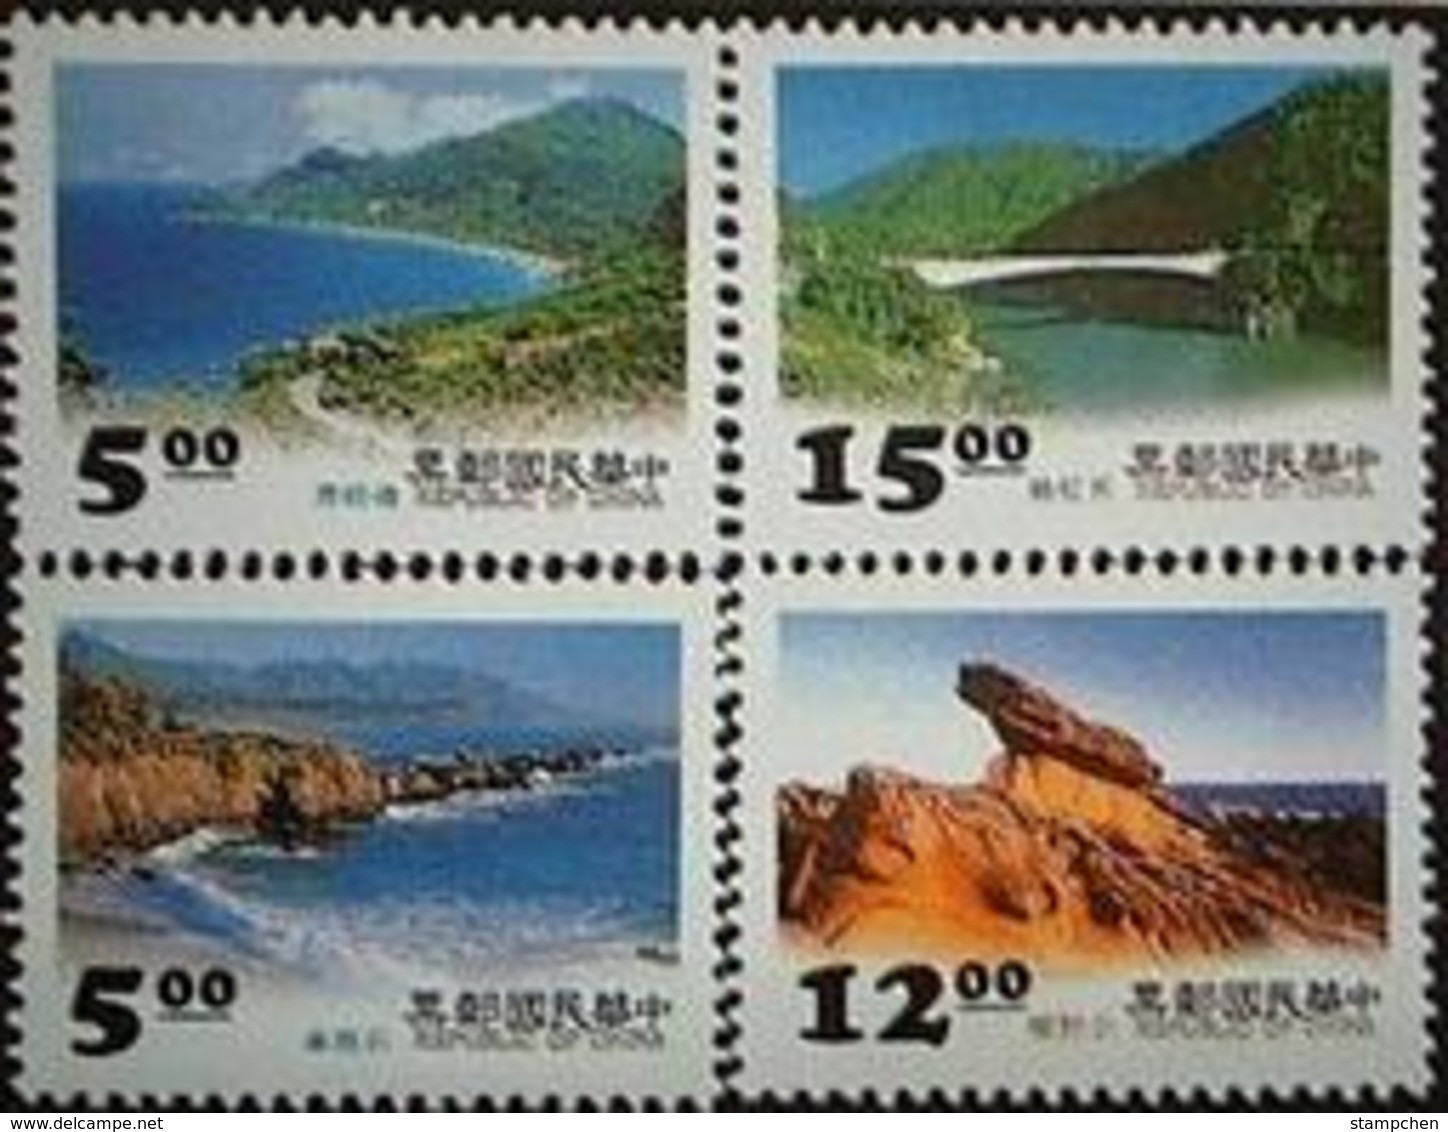 1995 East Coast Scenic Area Stamps Rock Geology Ocean Bridge Taiwan Scenery Tourism - Water